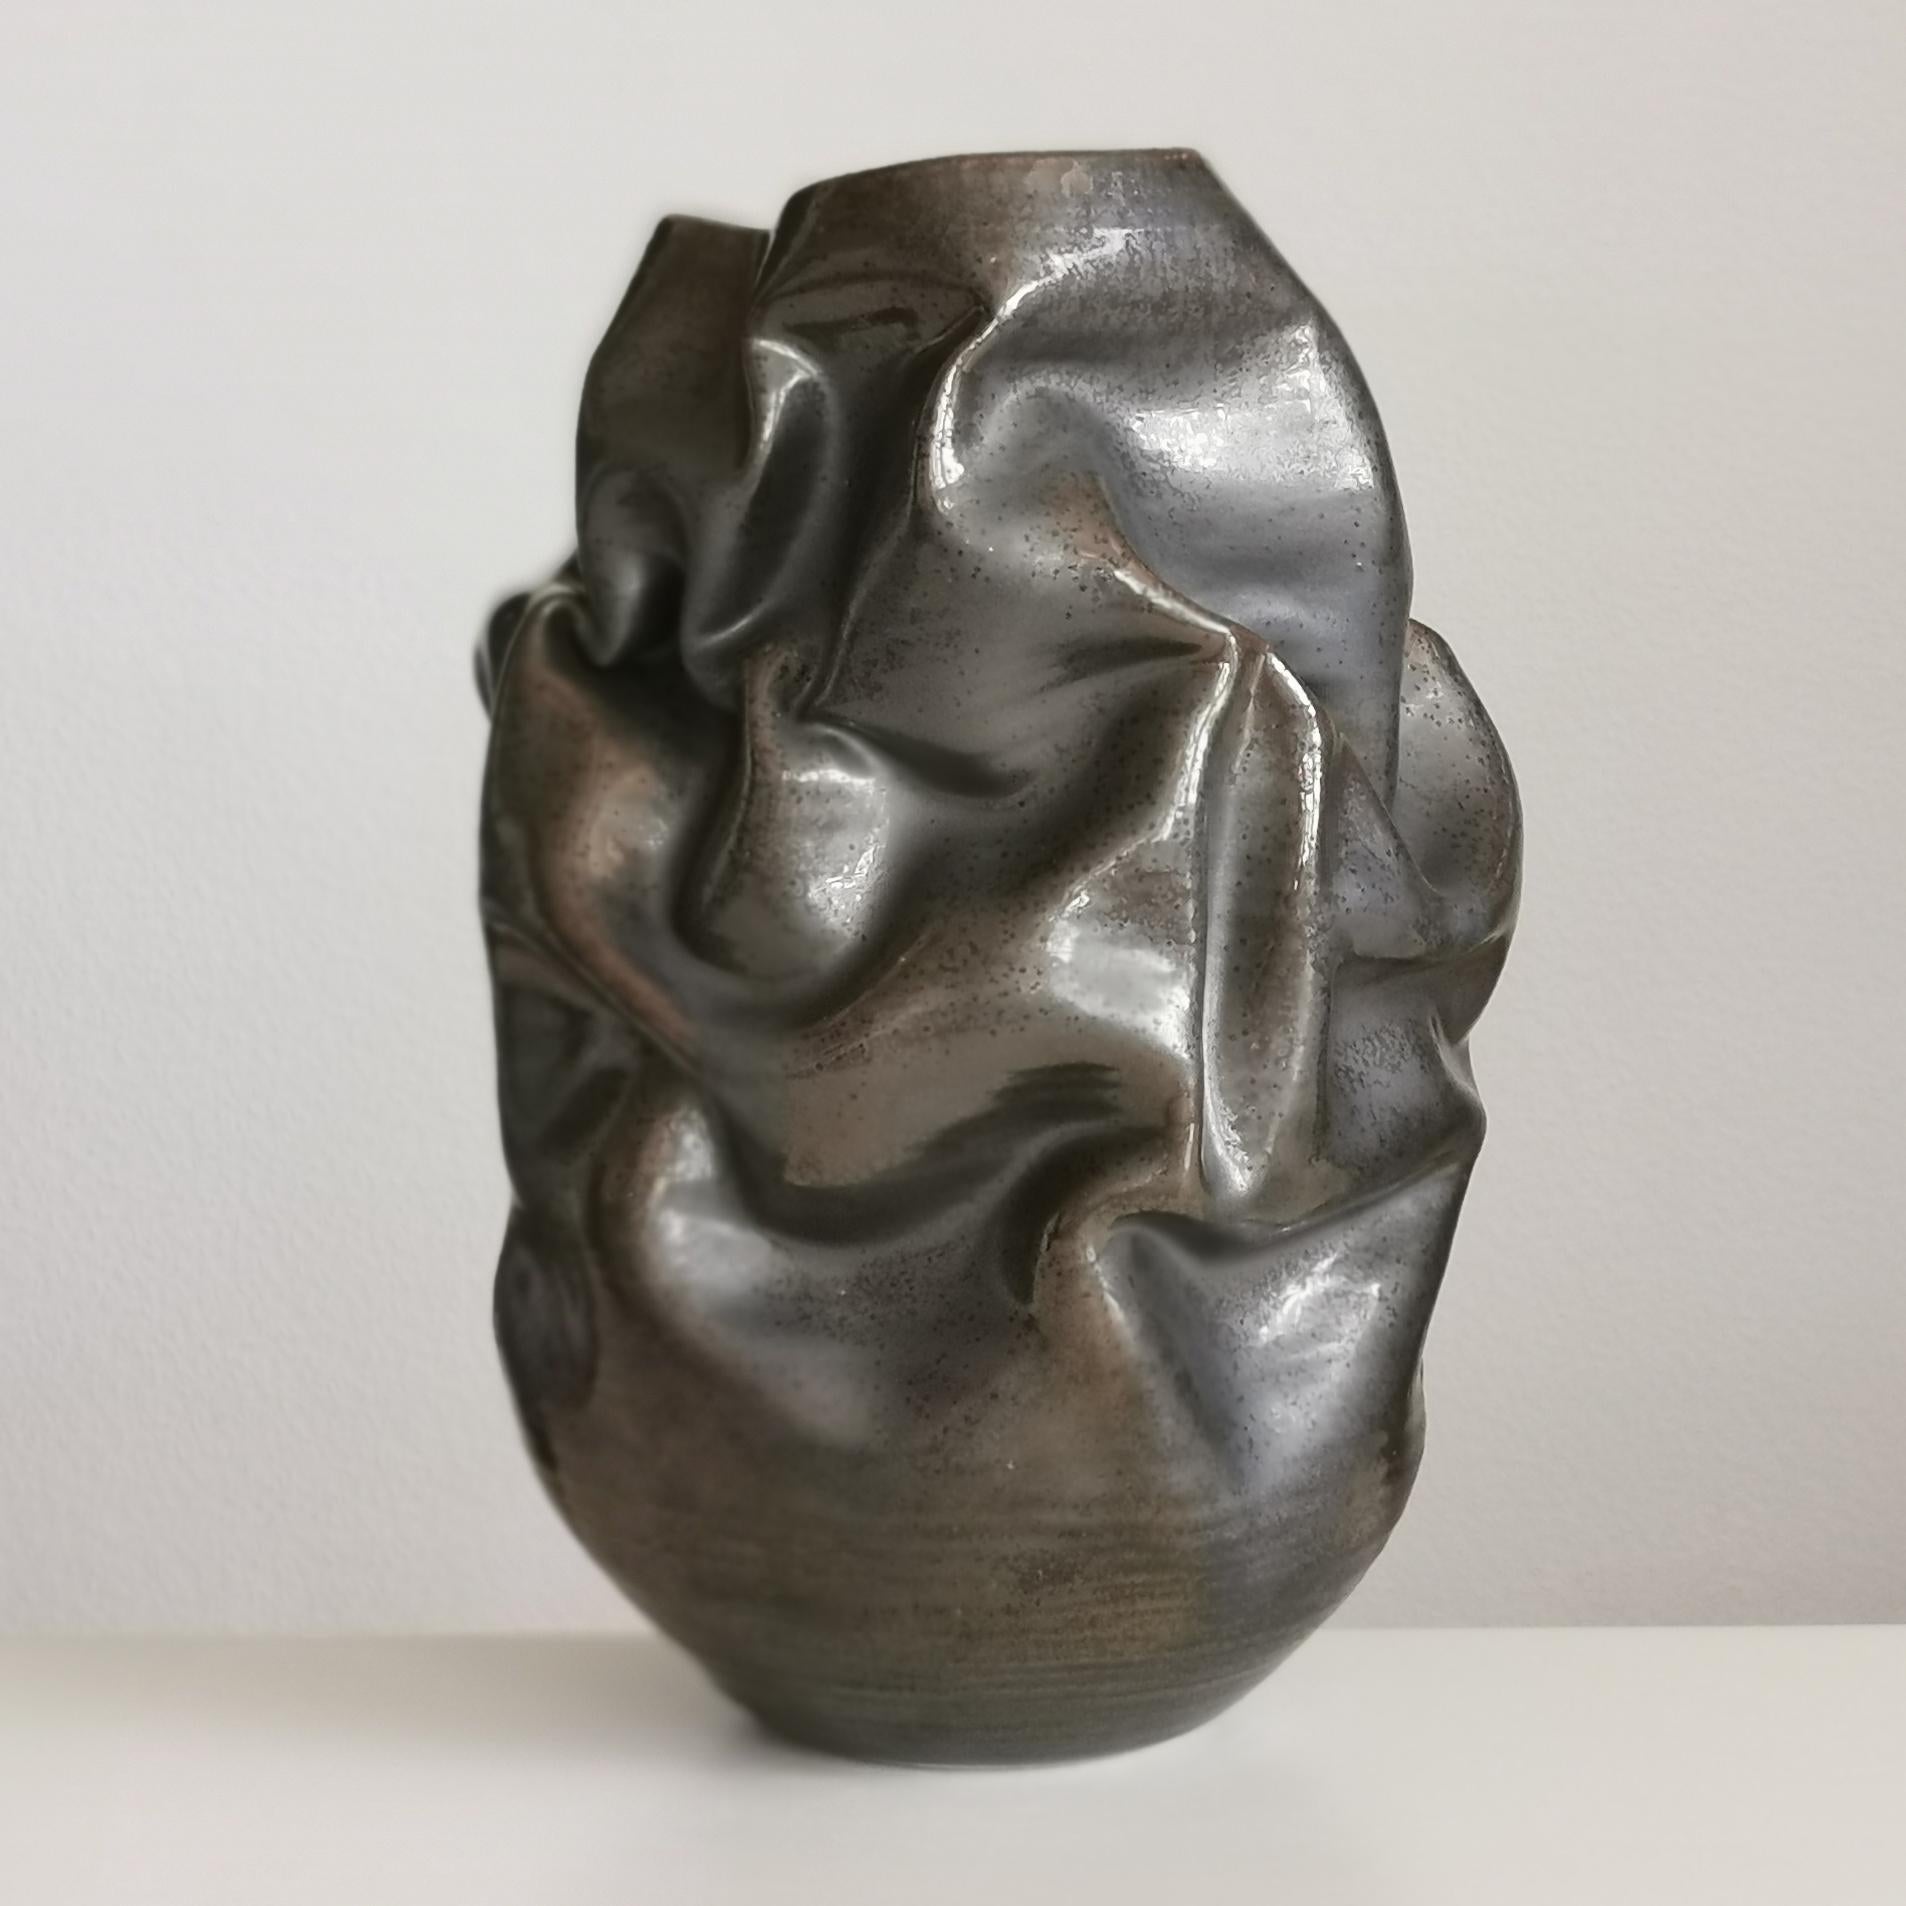 Contemporary Black Metallic Crumpled Form No 32, Ceramic Vessel by Nicholas Arroyave-Portela